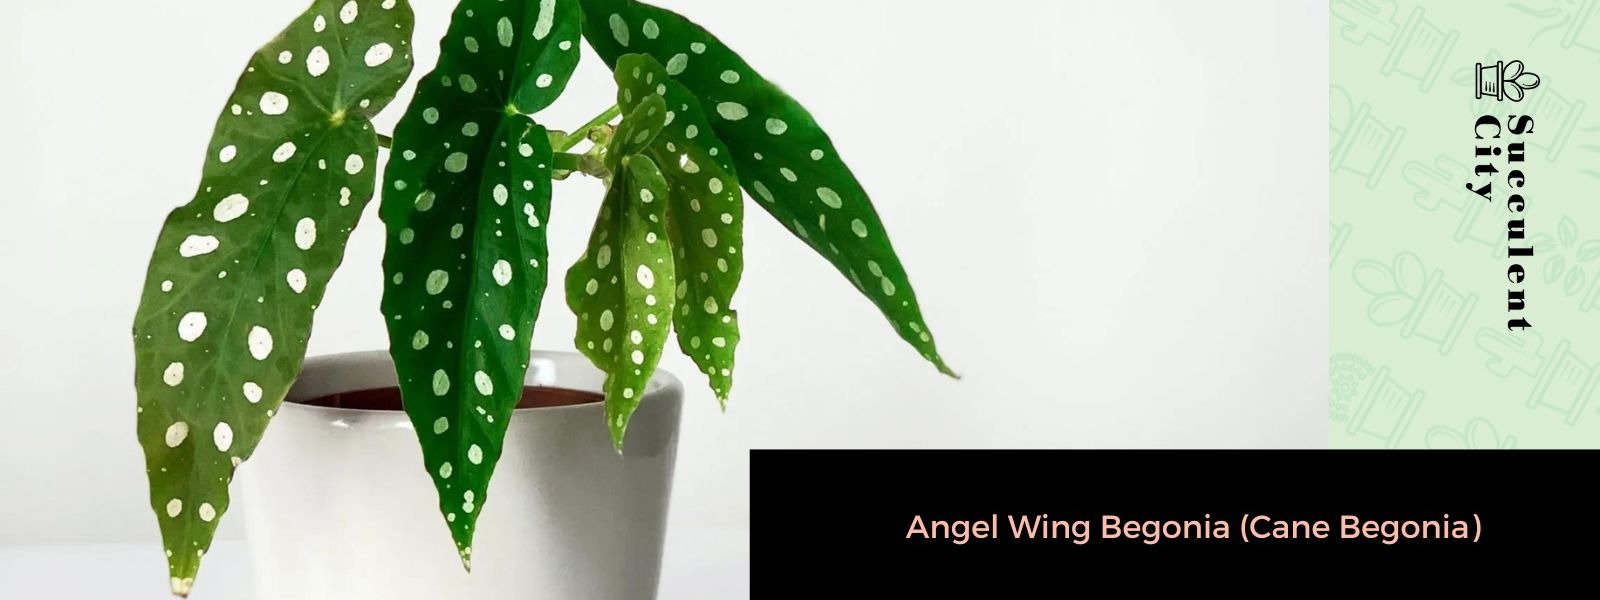 Begonia de ala de ángel (begonia de azúcar)